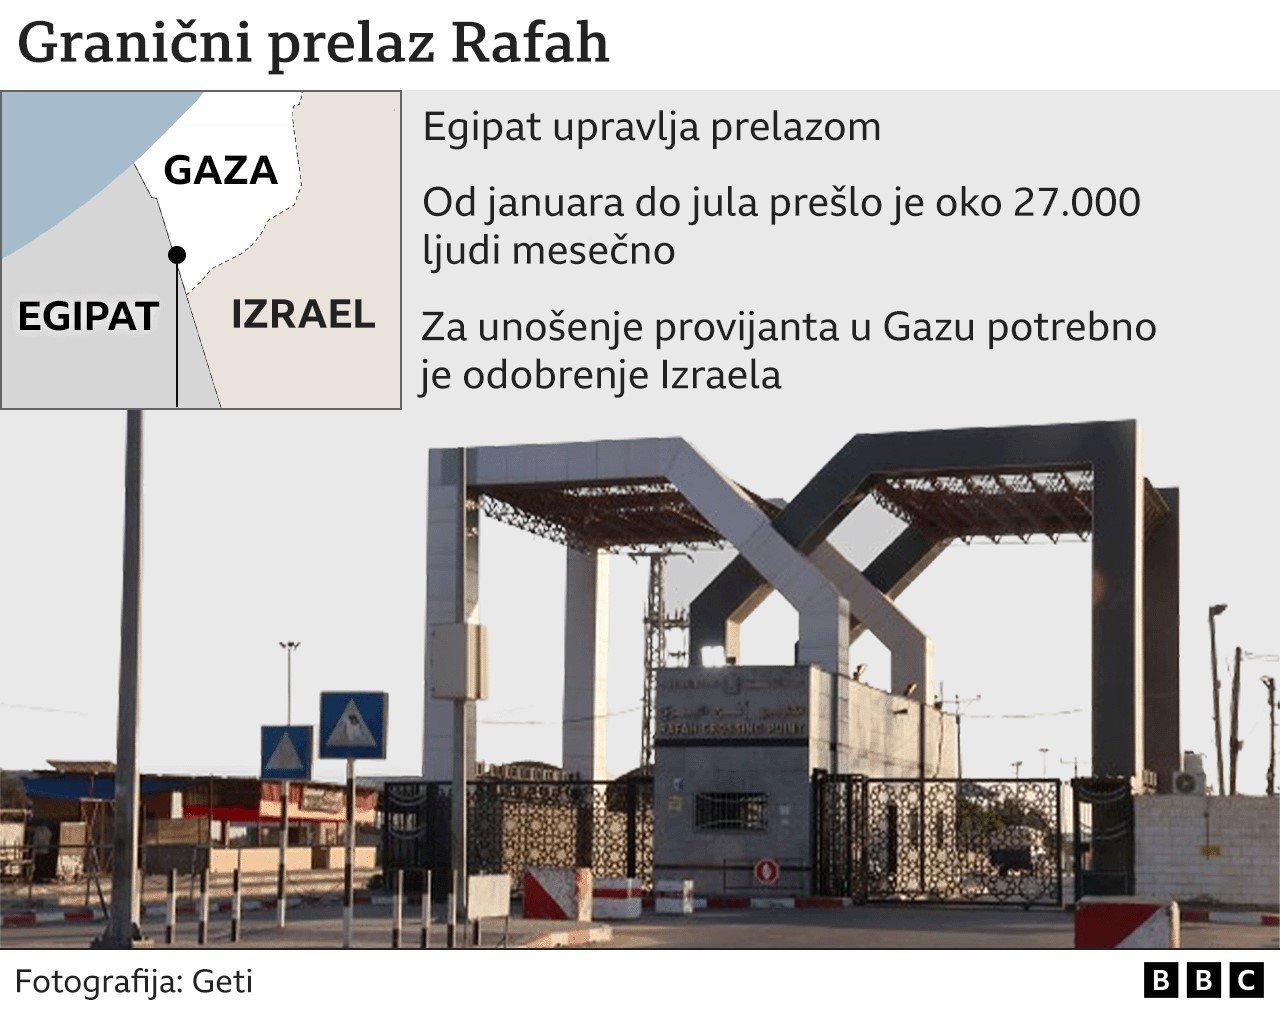 Rafah prelaz